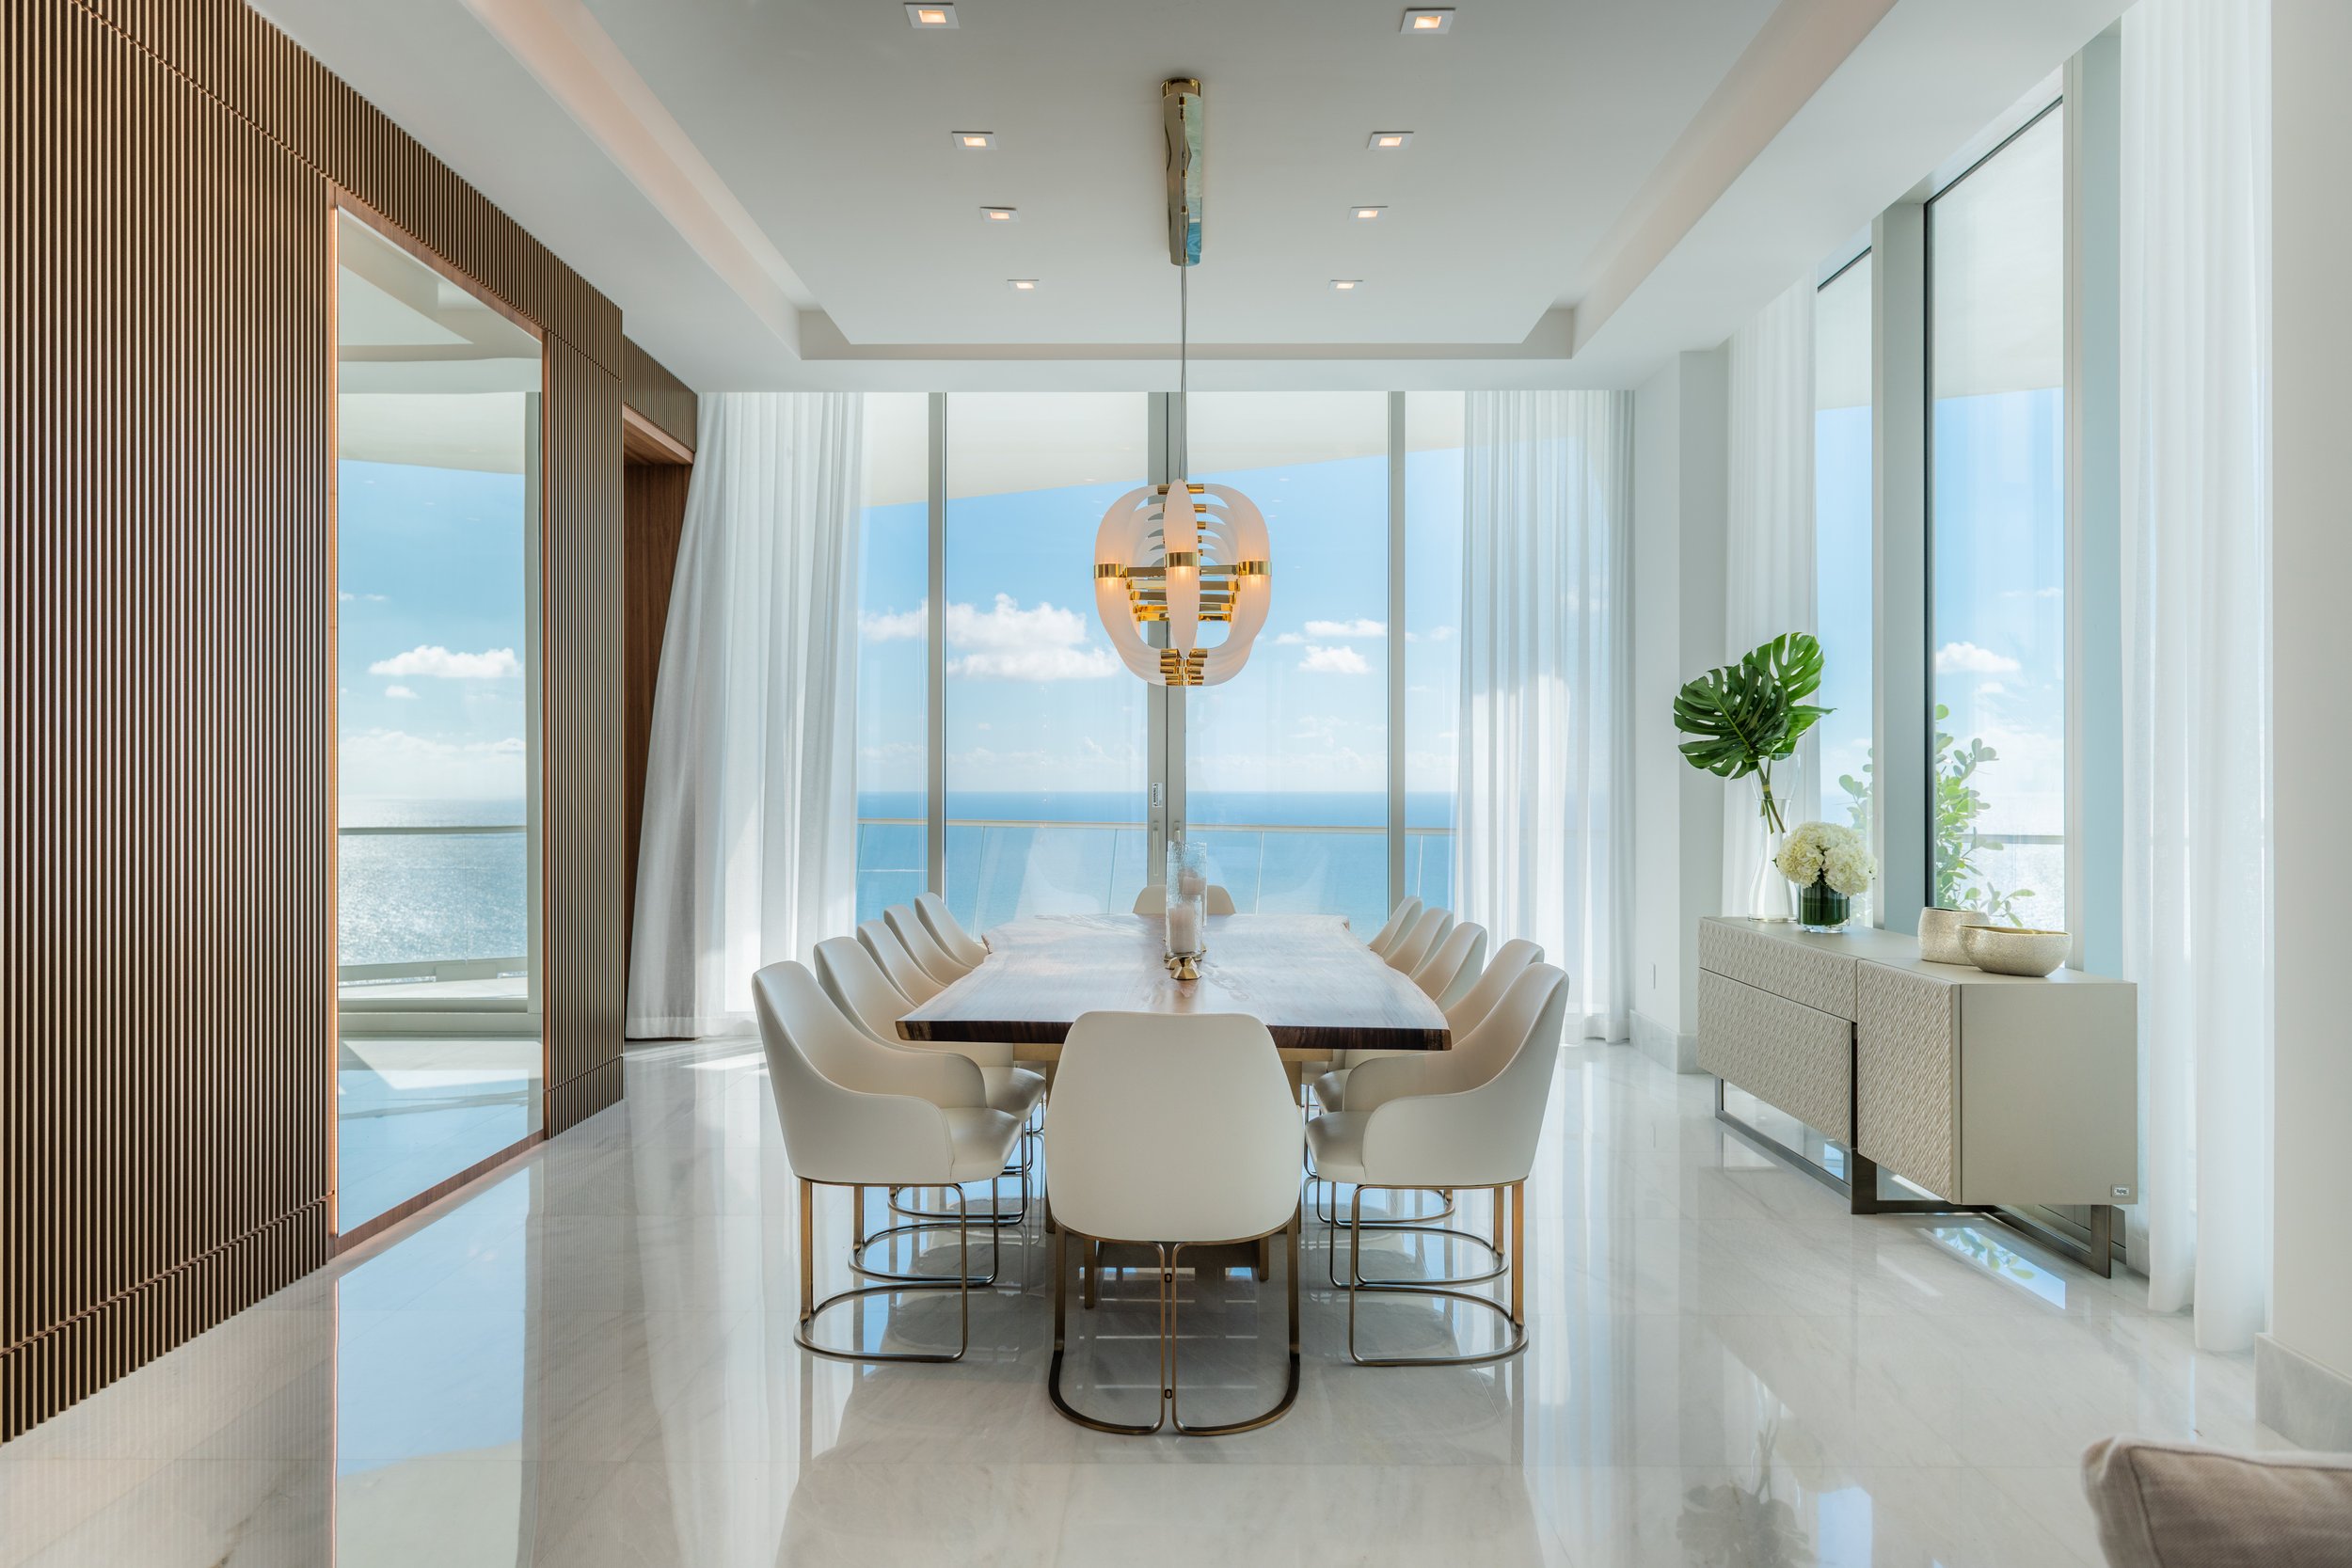 Billionaire Entrepreneur Buys $23.5 Million Penthouse Through Social Media at Jade Signature14.jpg